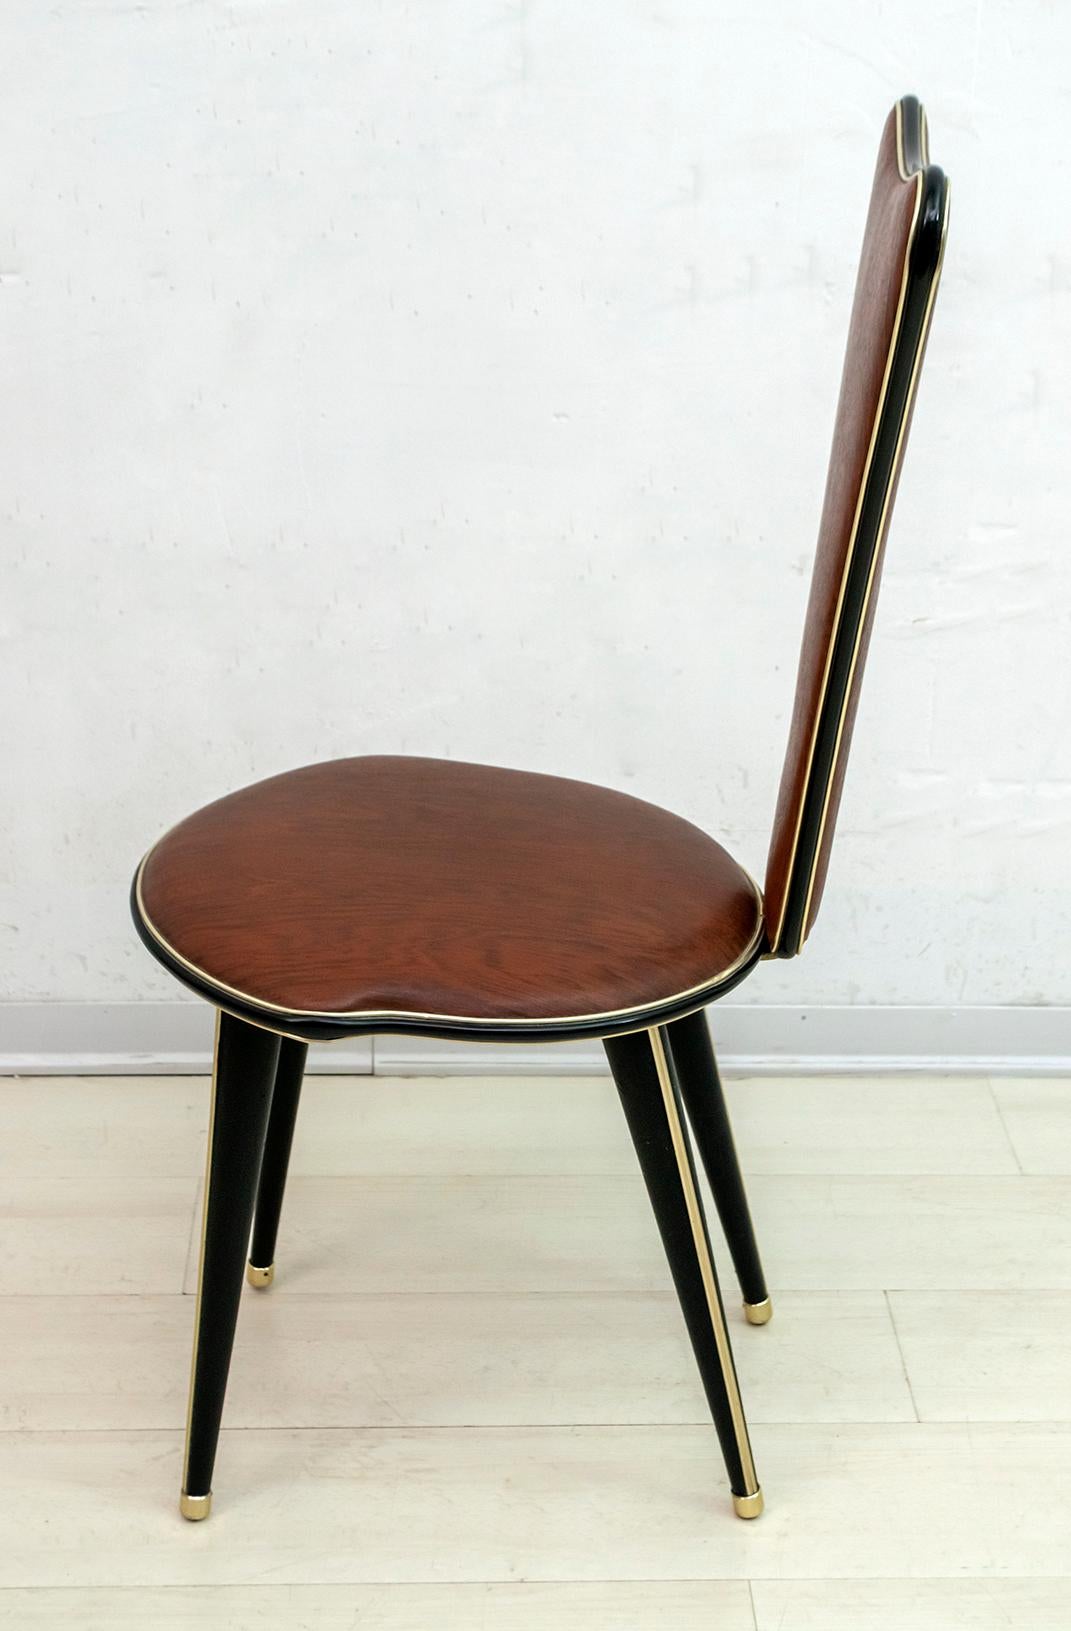 Umberto Mascagni for Harrods London Midcentury Modern Italian Dining Chairs, 50s 1